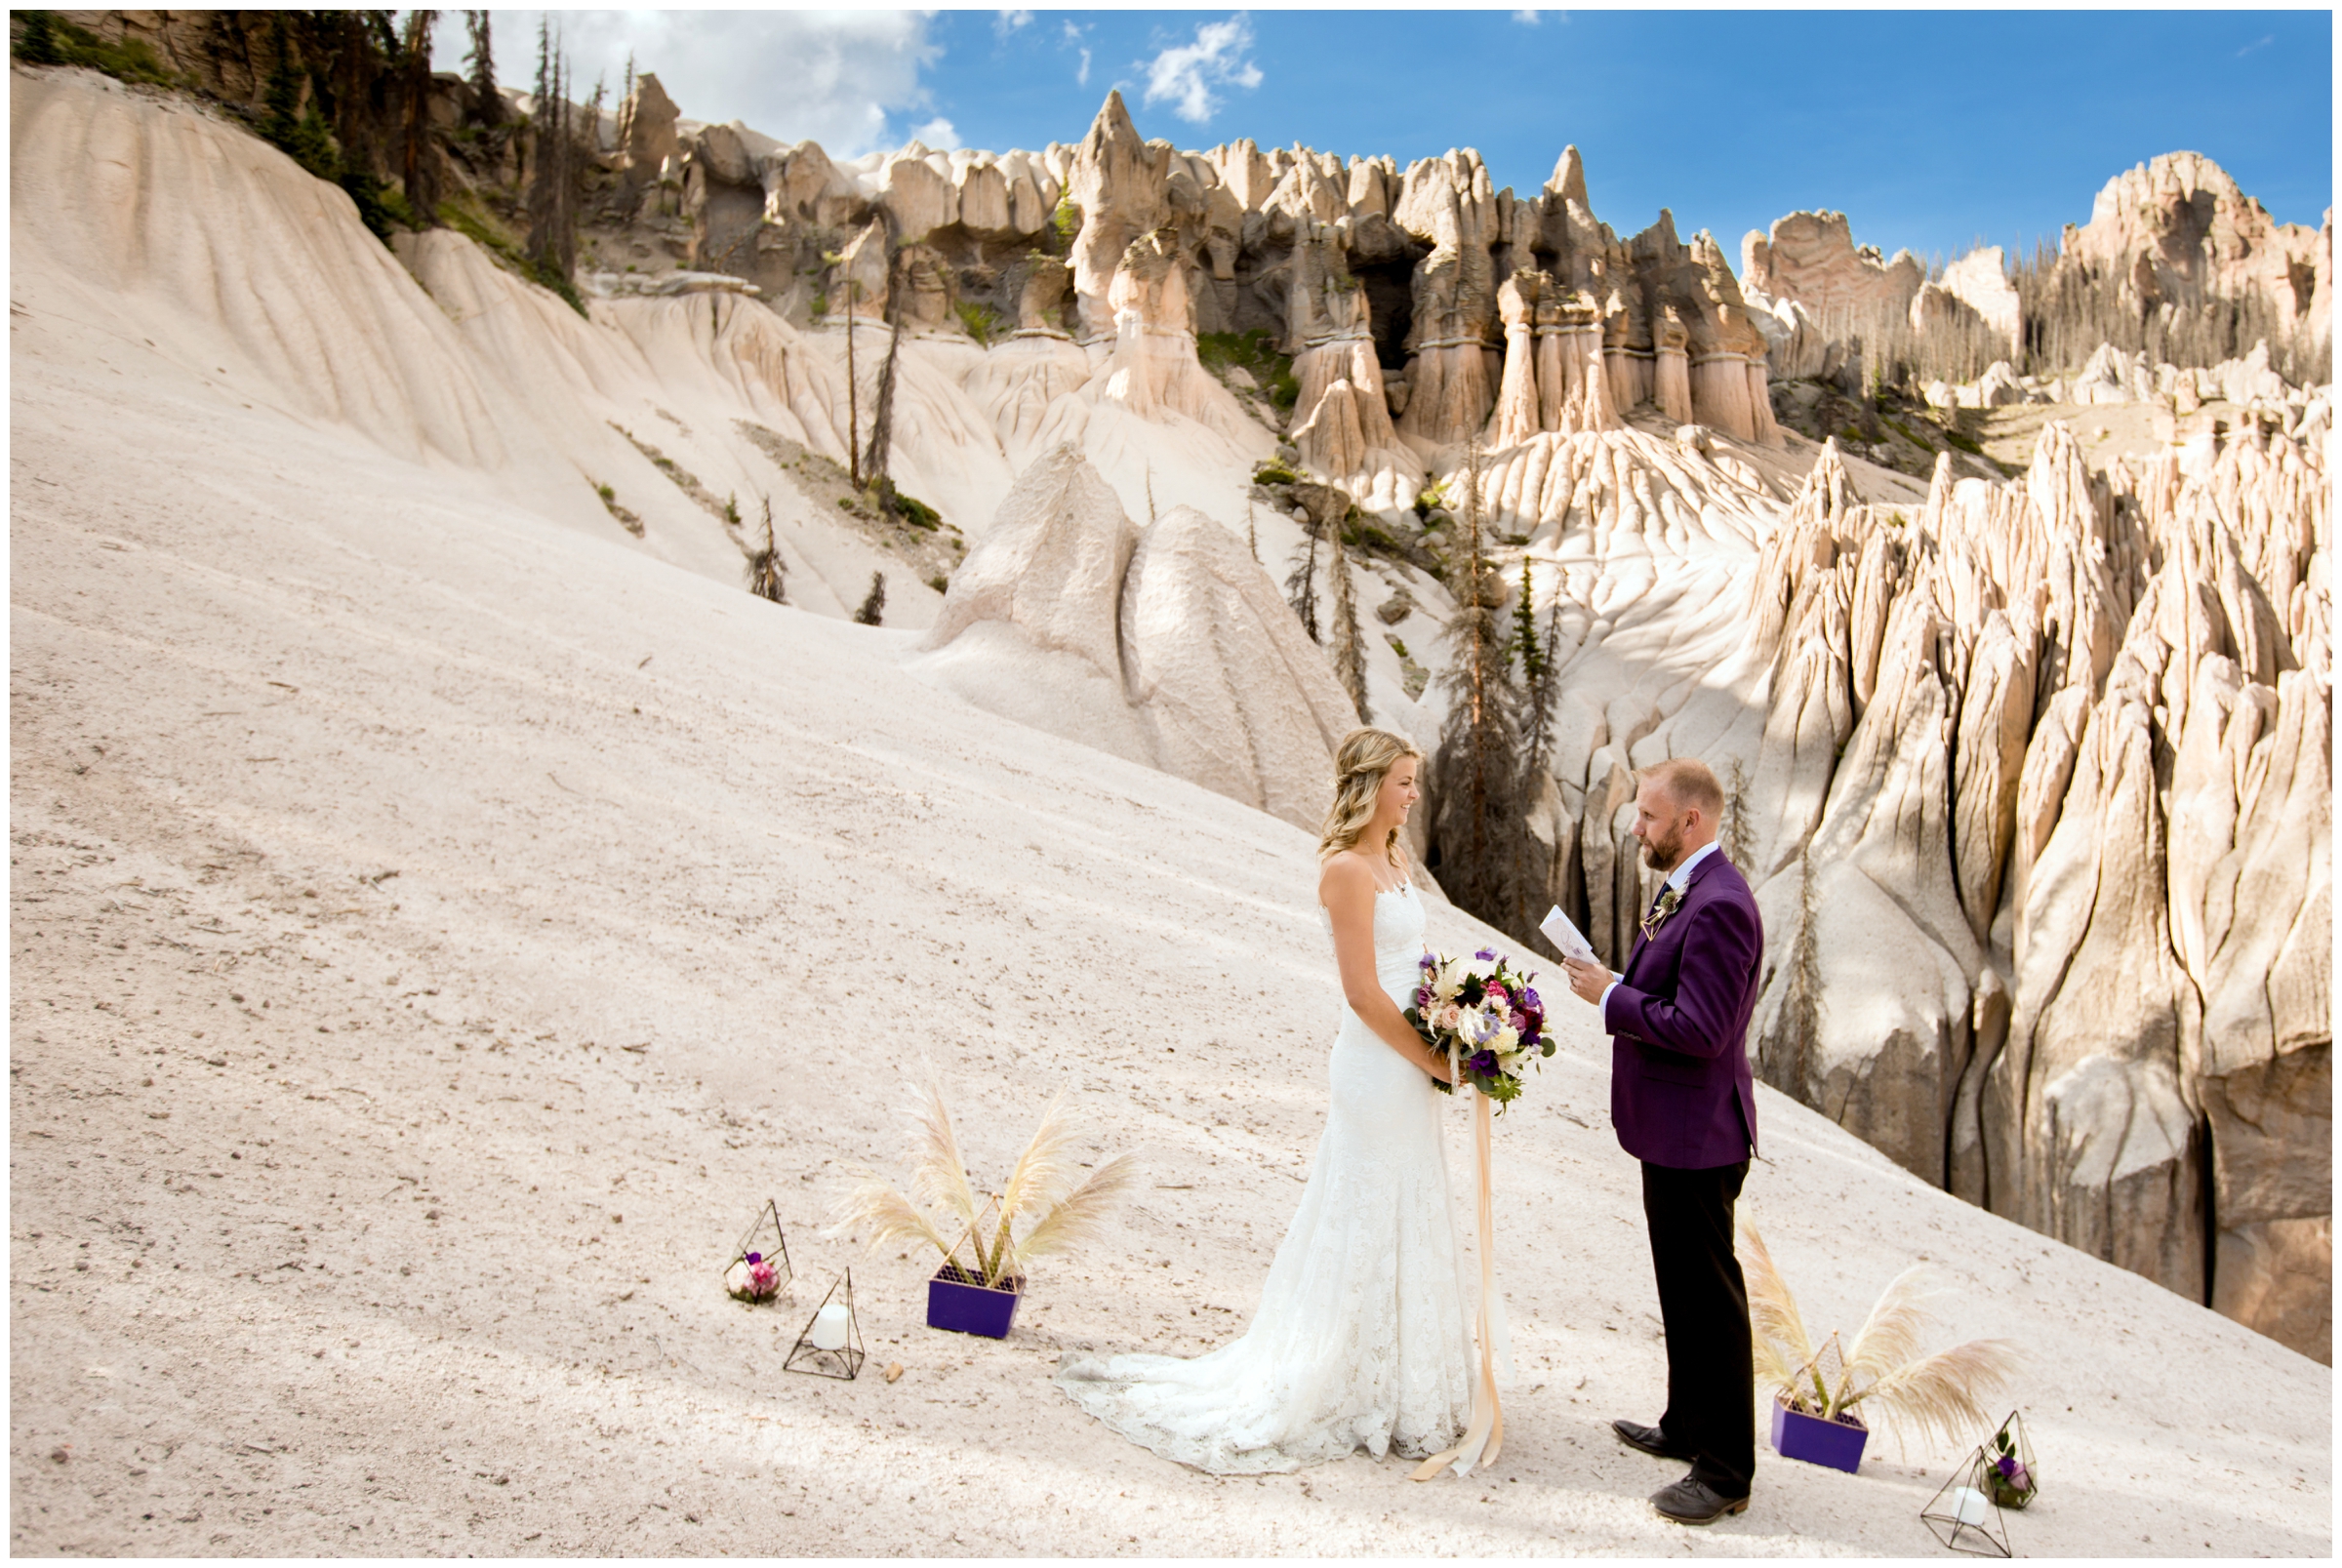 wedding ceremony at Southern Colorado intimate 4-wheeling elopement 